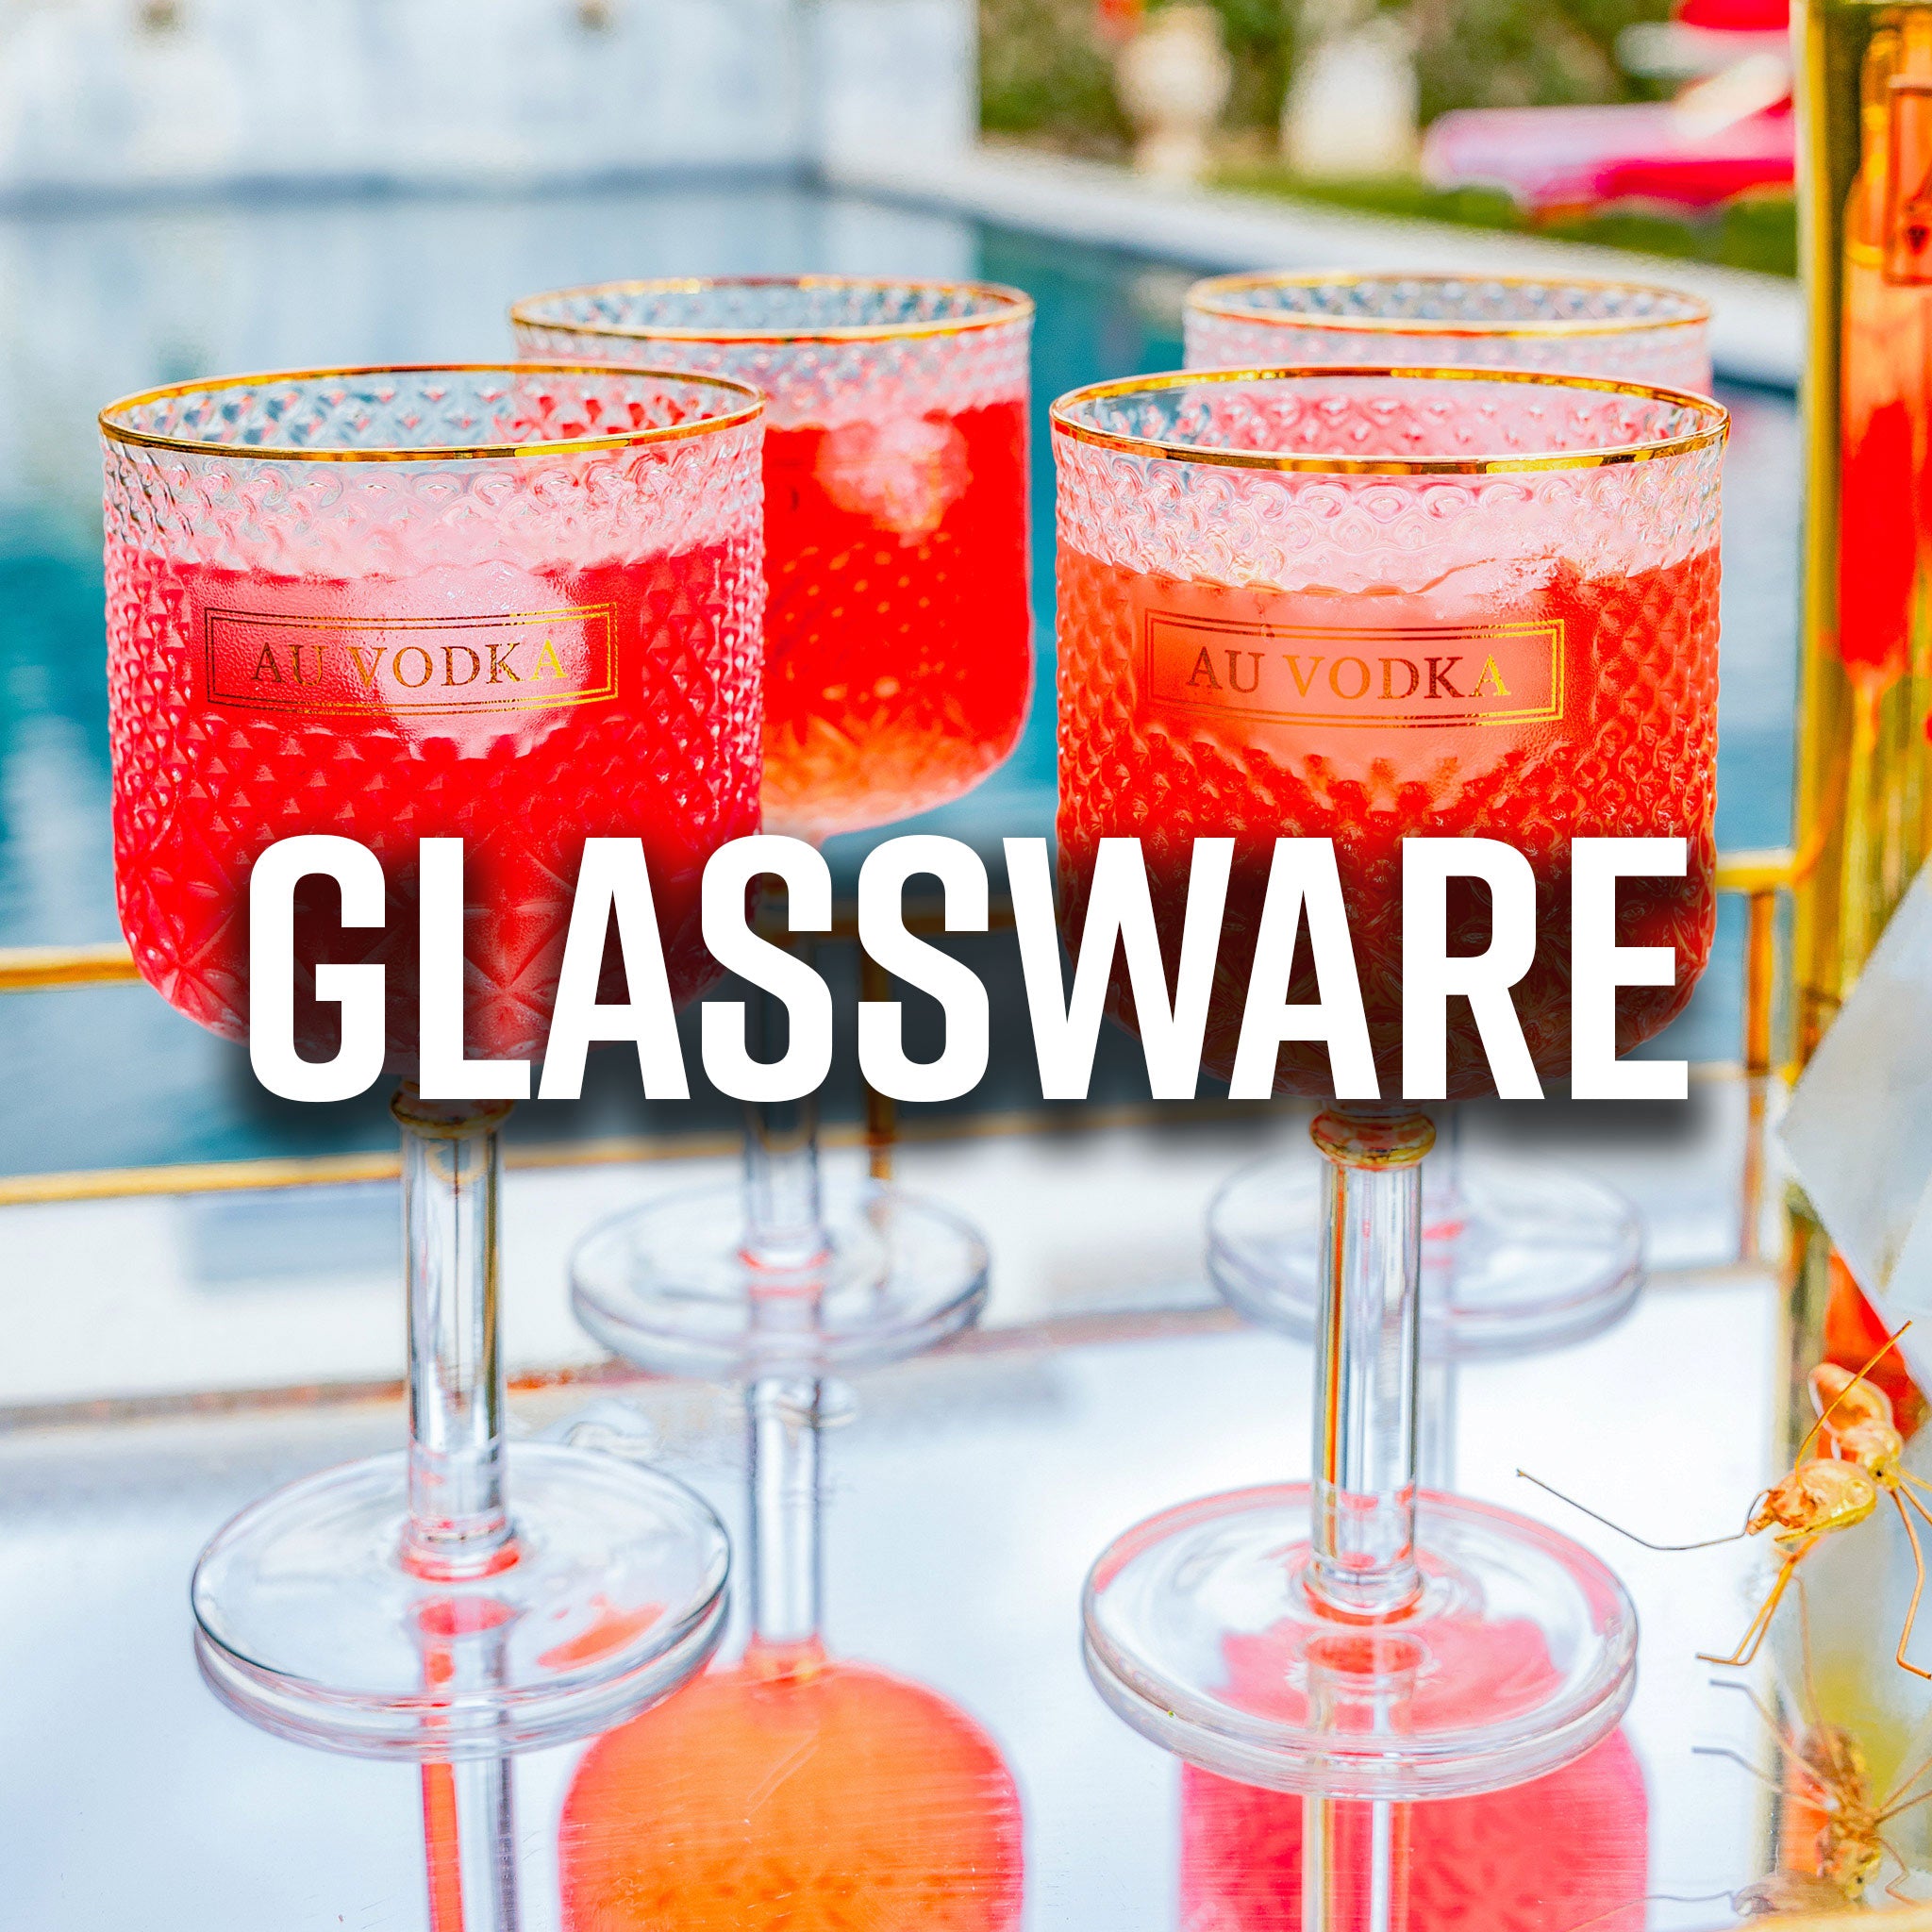 Glassware – Au Vodka